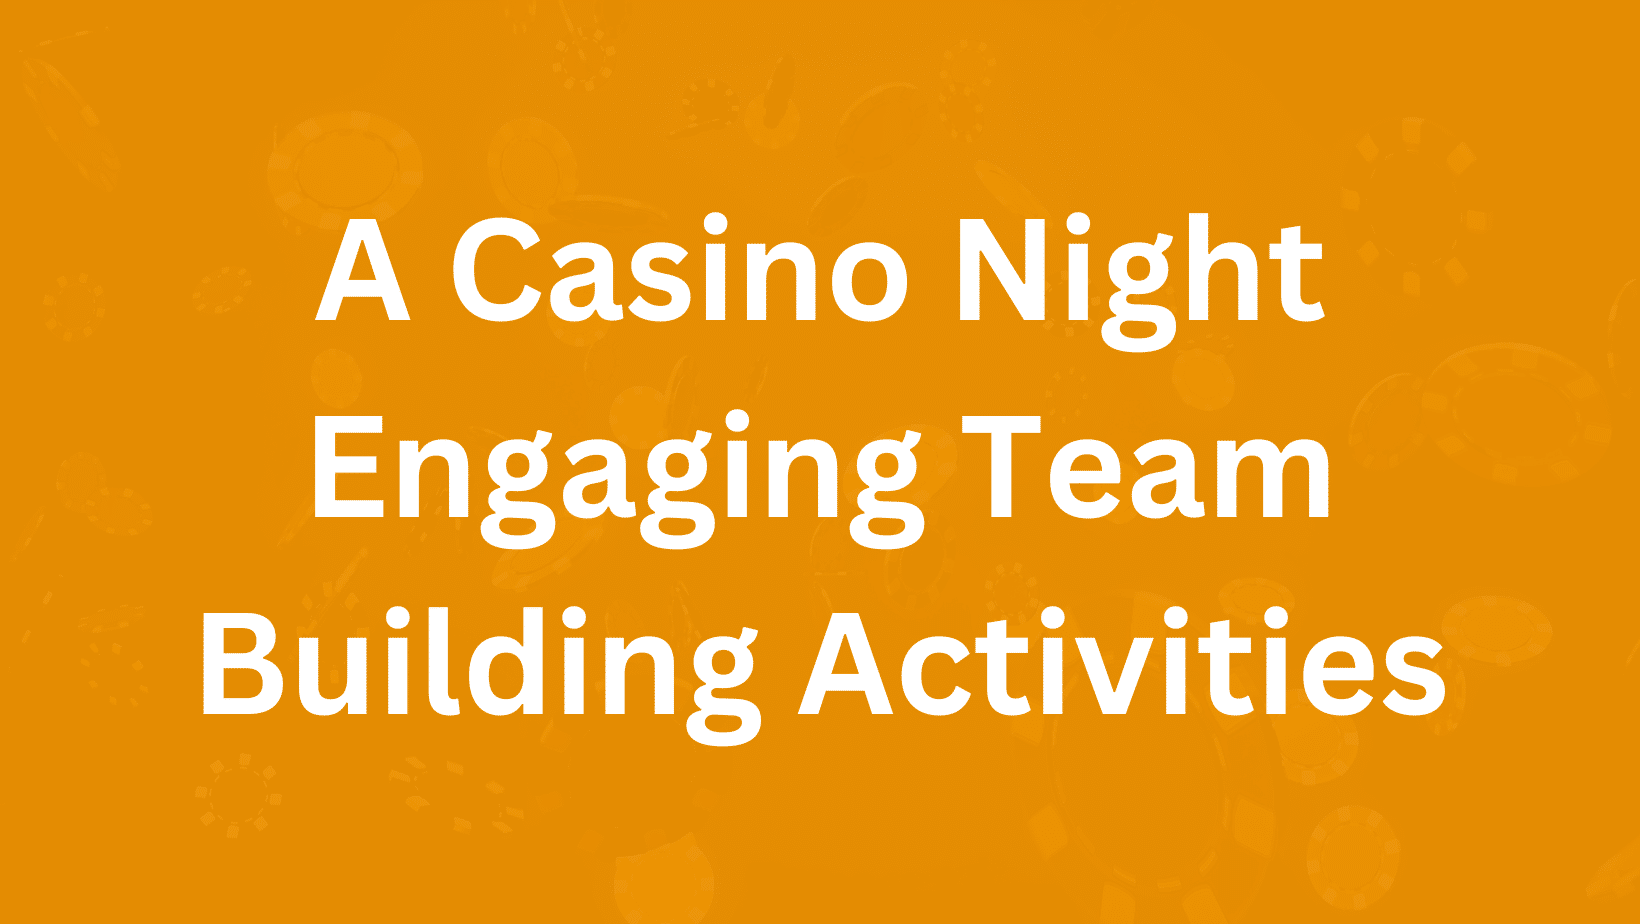 A Casino Night Engaging Team Building Activities_